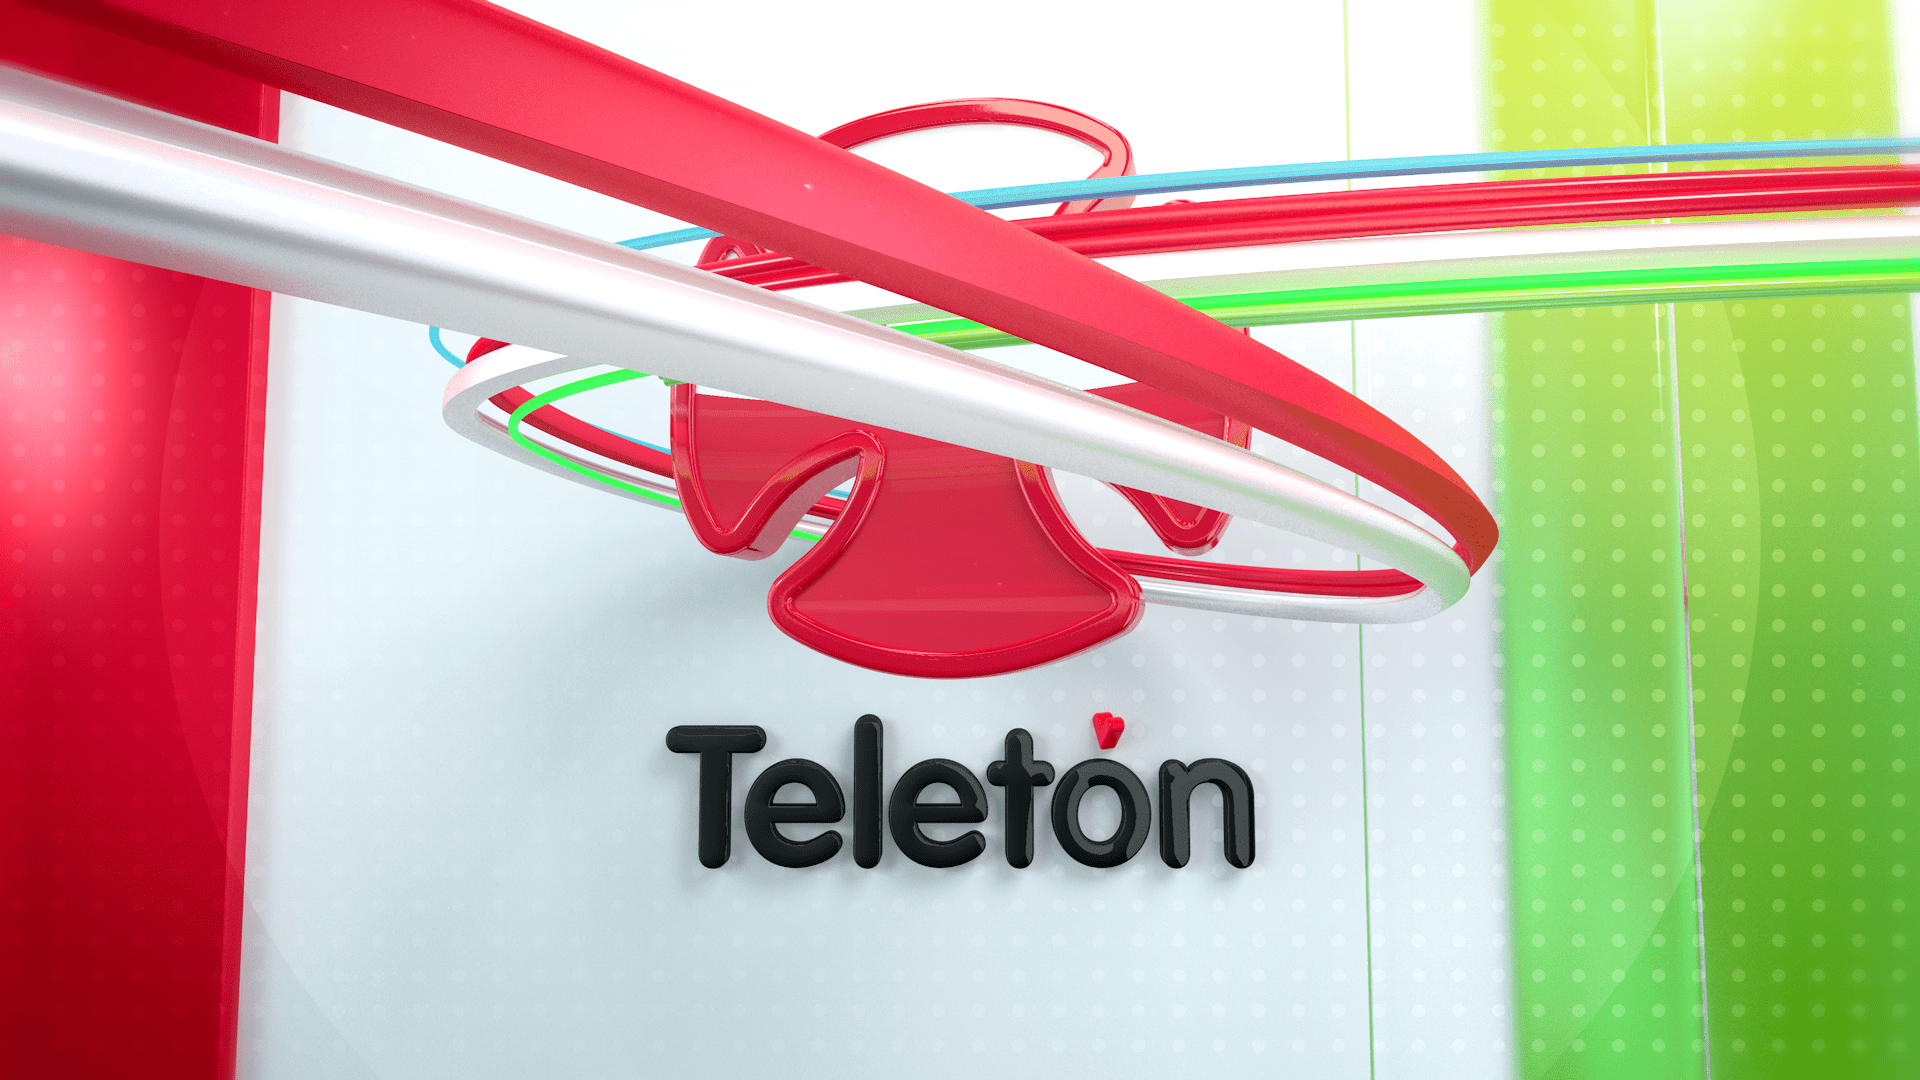 Girraphic Teleton Chile 2020 Cover